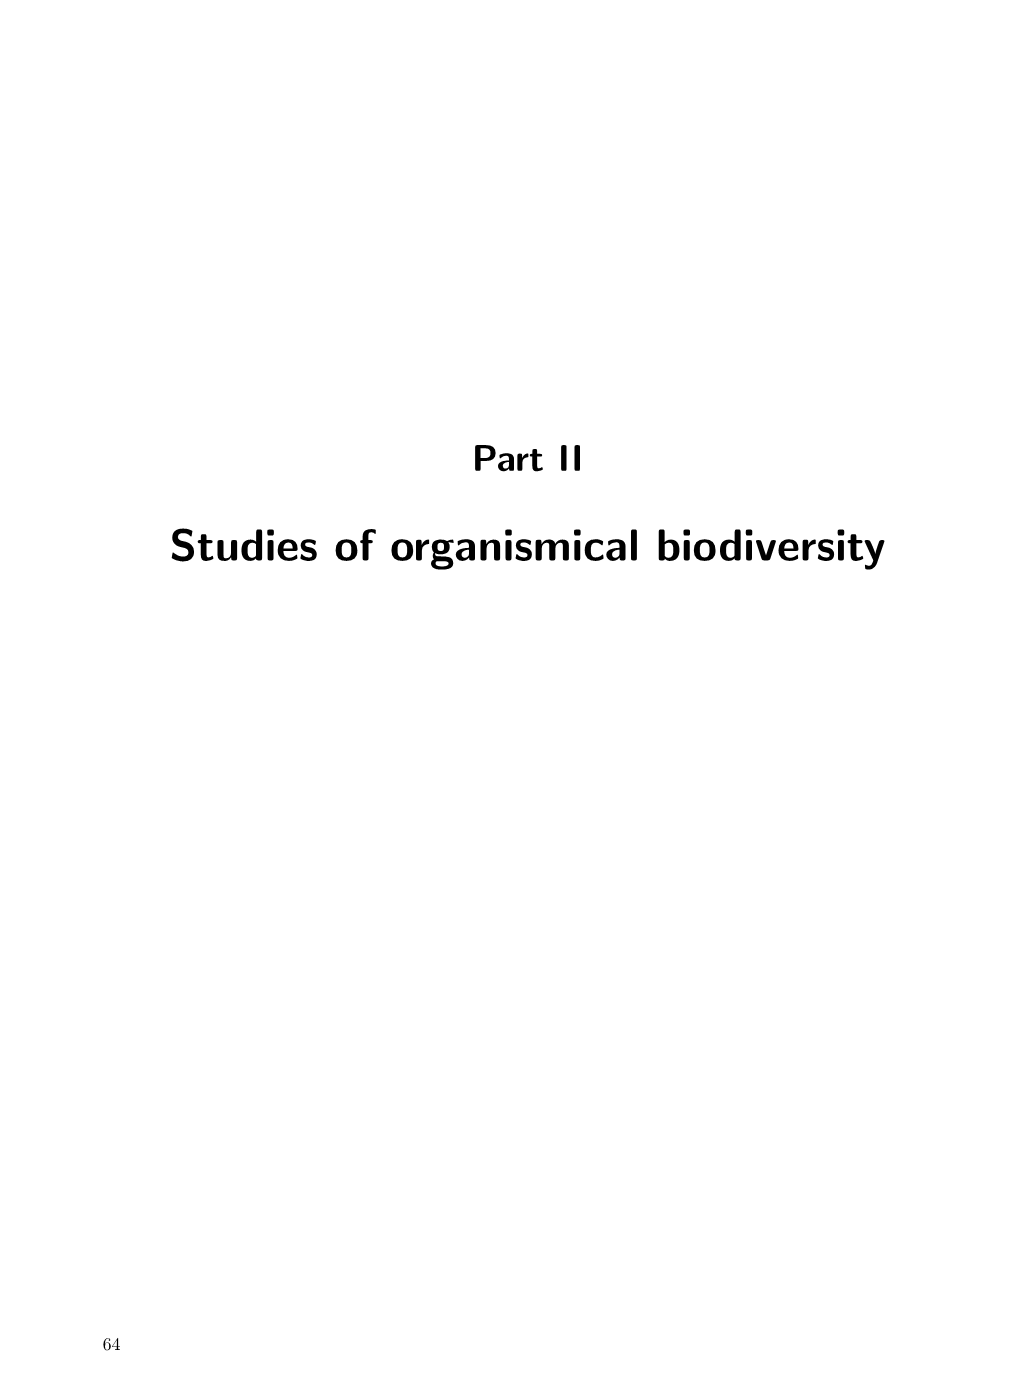 Studies of Organismical Biodiversity